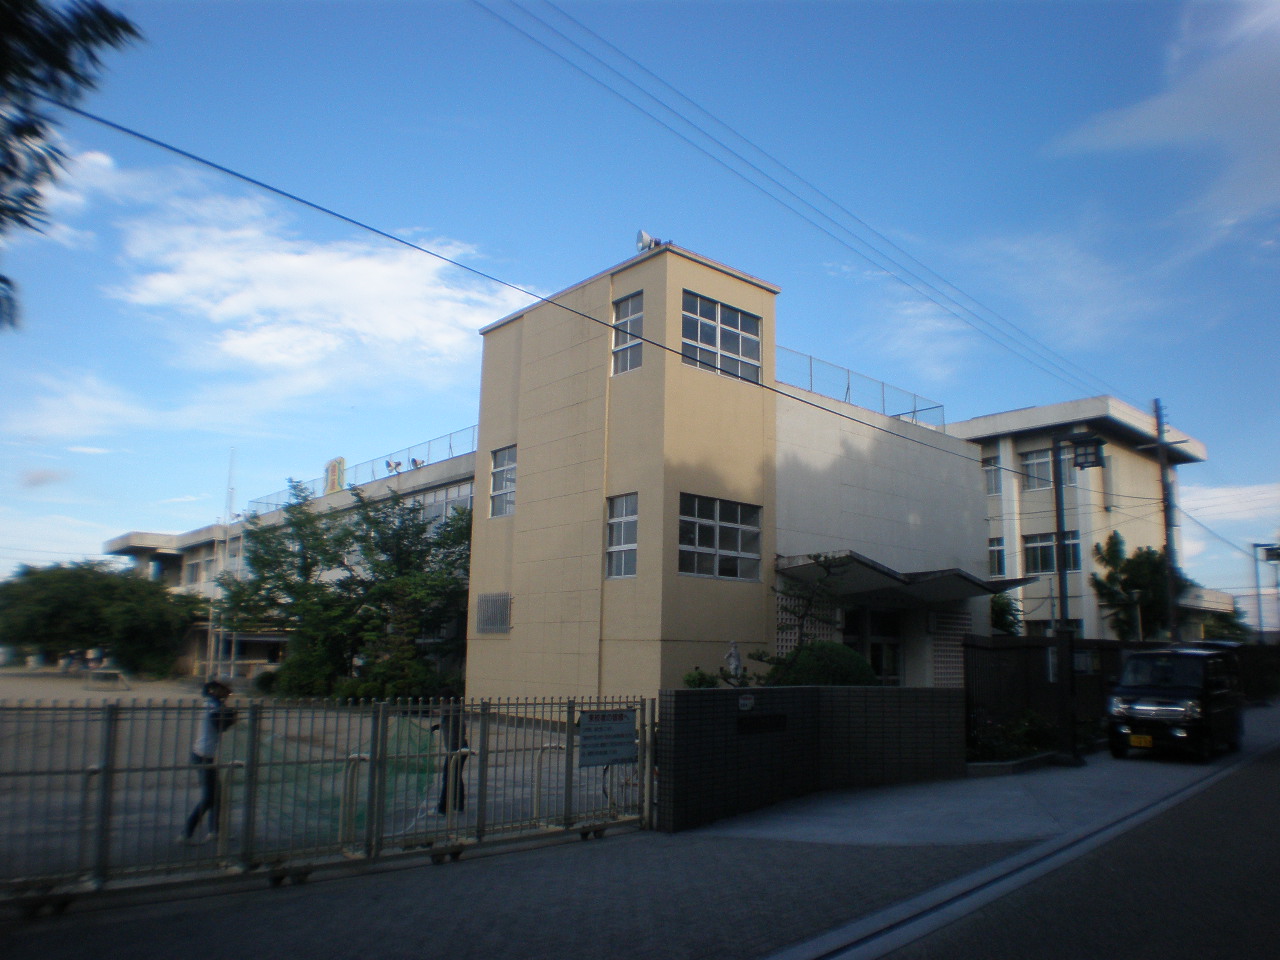 Primary school. Sagara to elementary school (elementary school) 620m